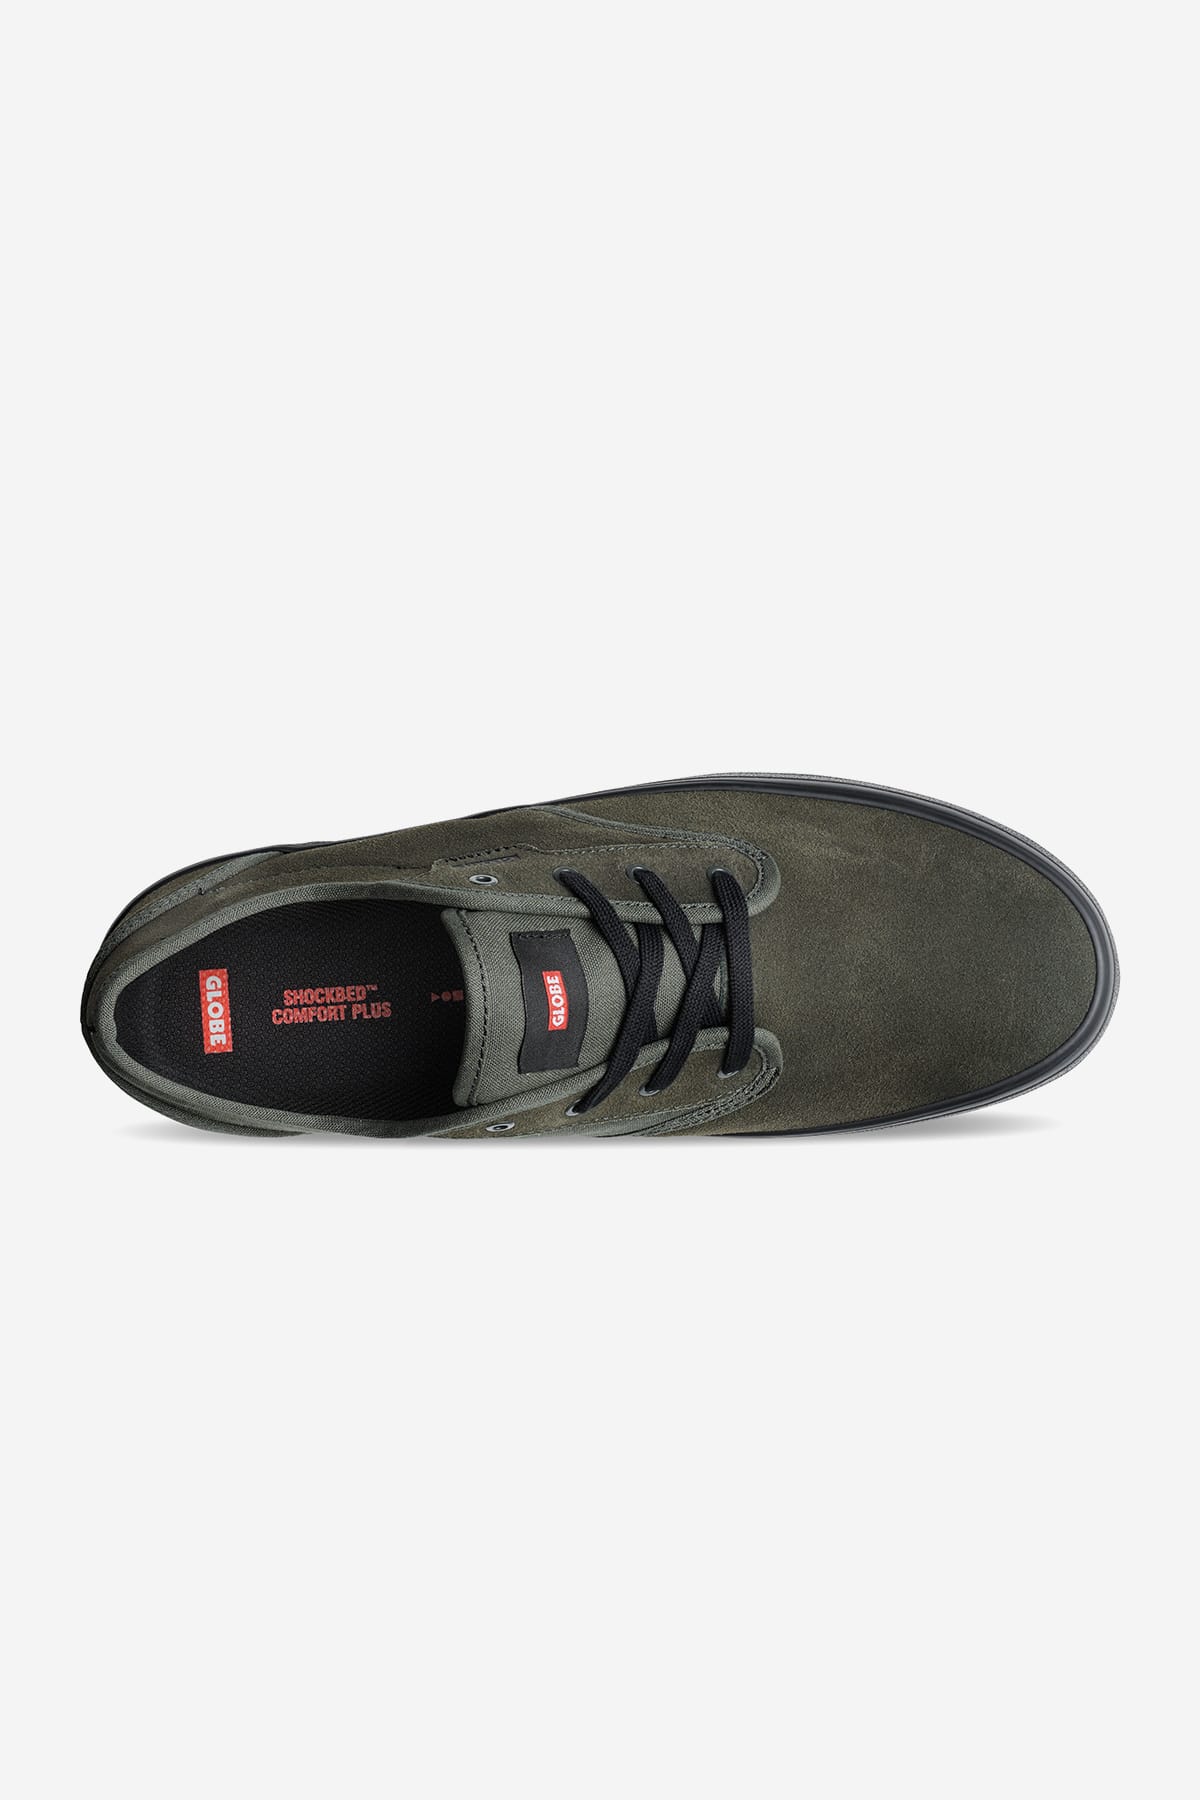 motley ii dark olive black skate shoes